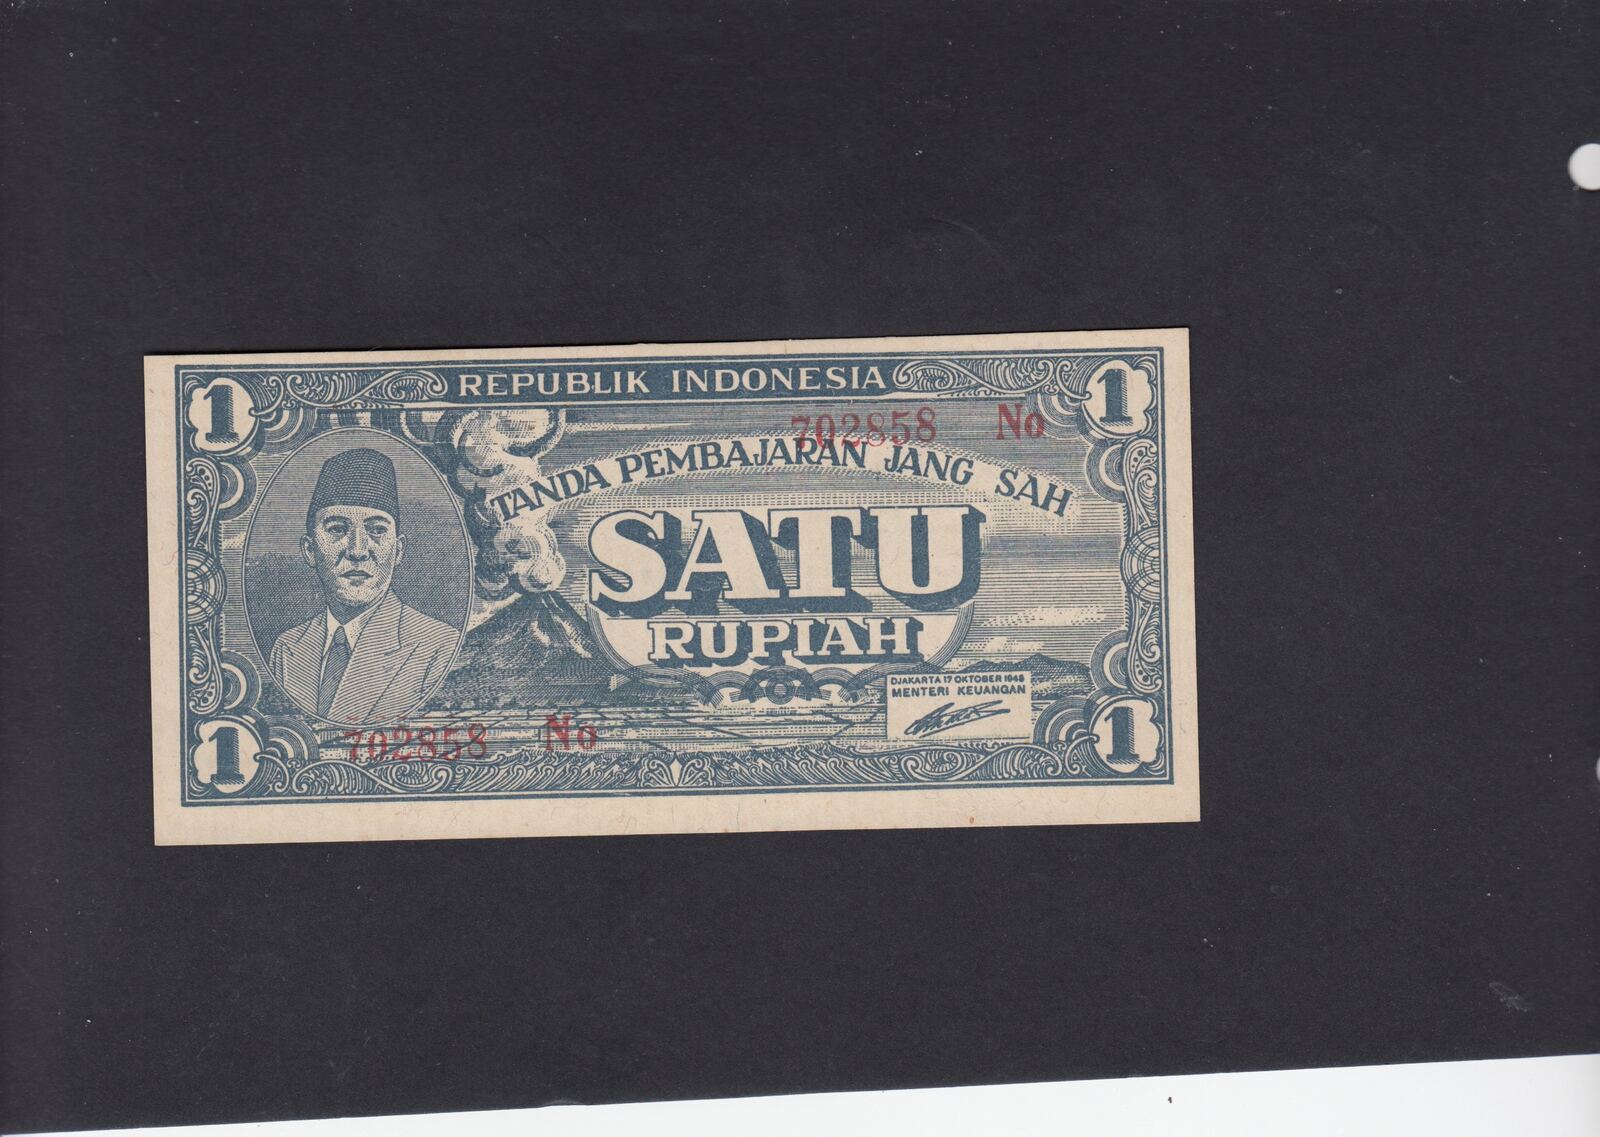 Indonesia UNC 1 Rupiah Banknote 1964 P-80a Soekarno 